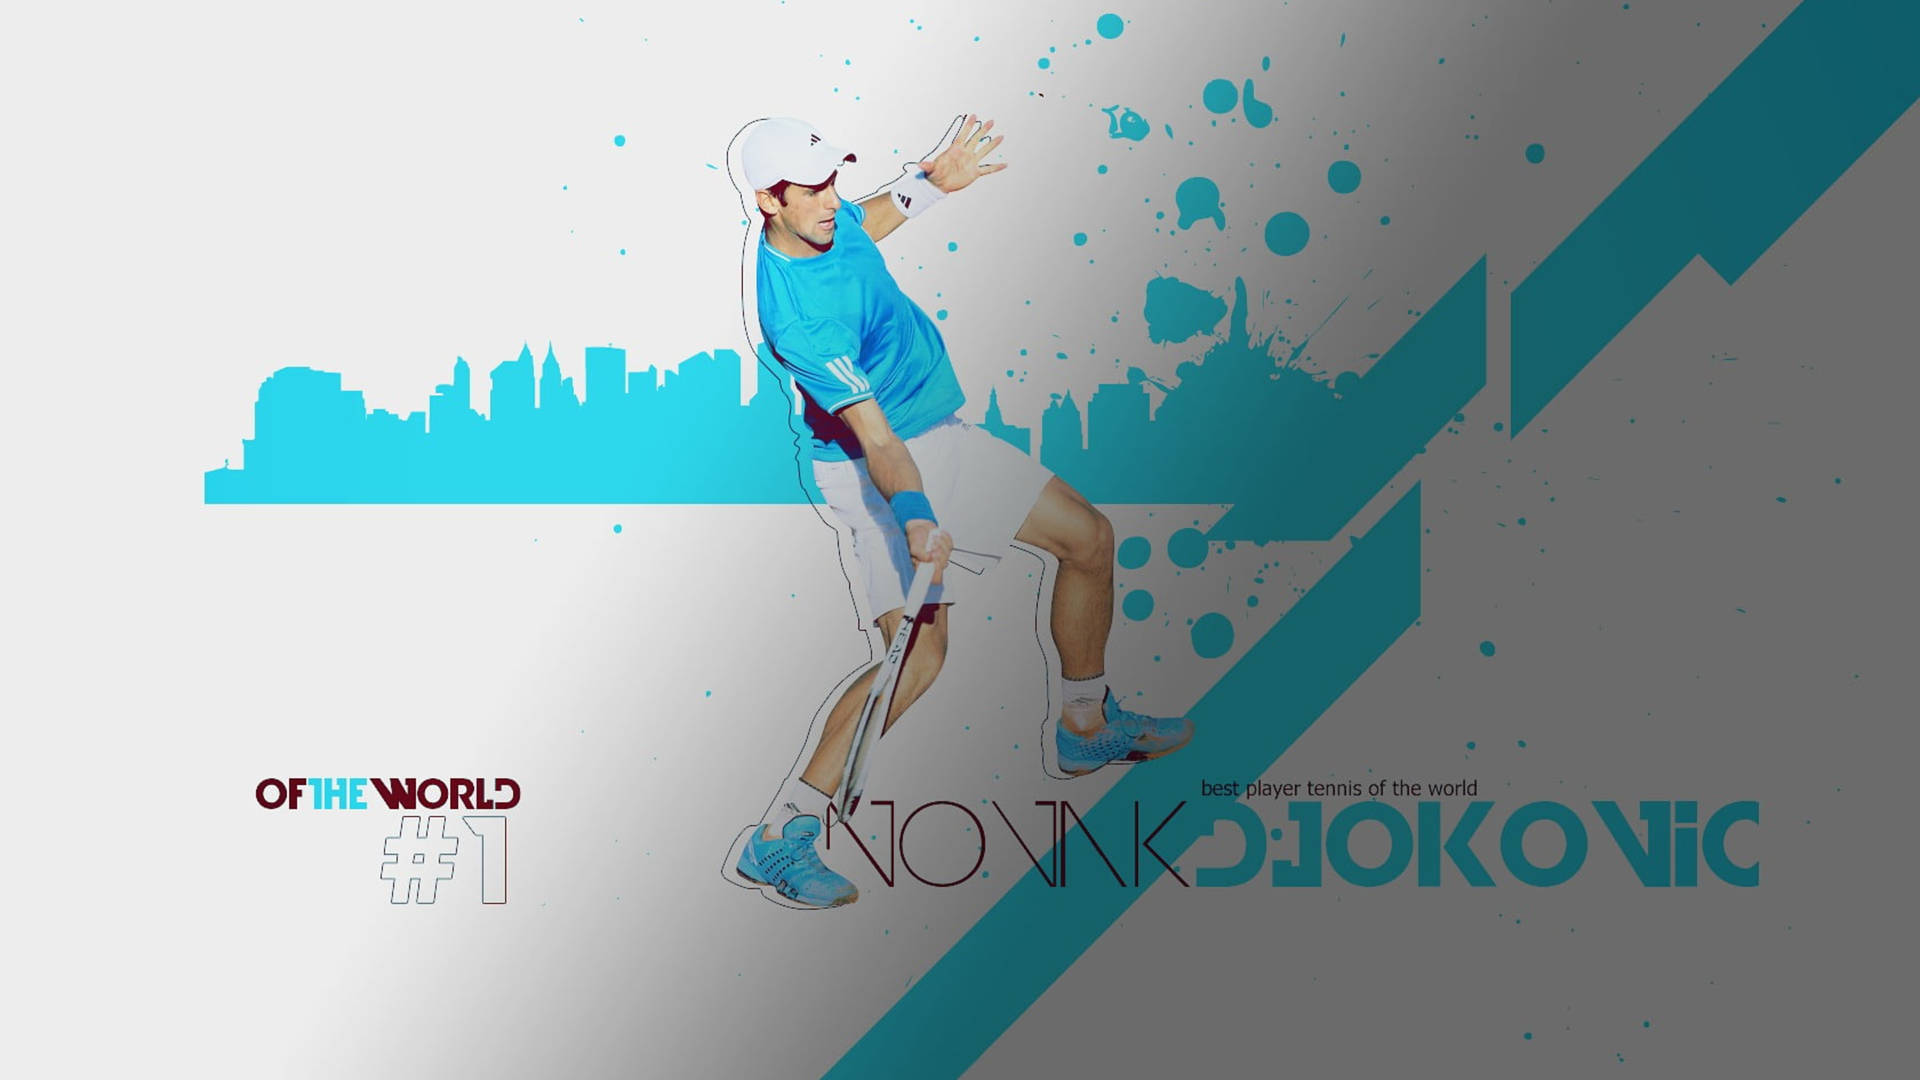 Djokovic Background